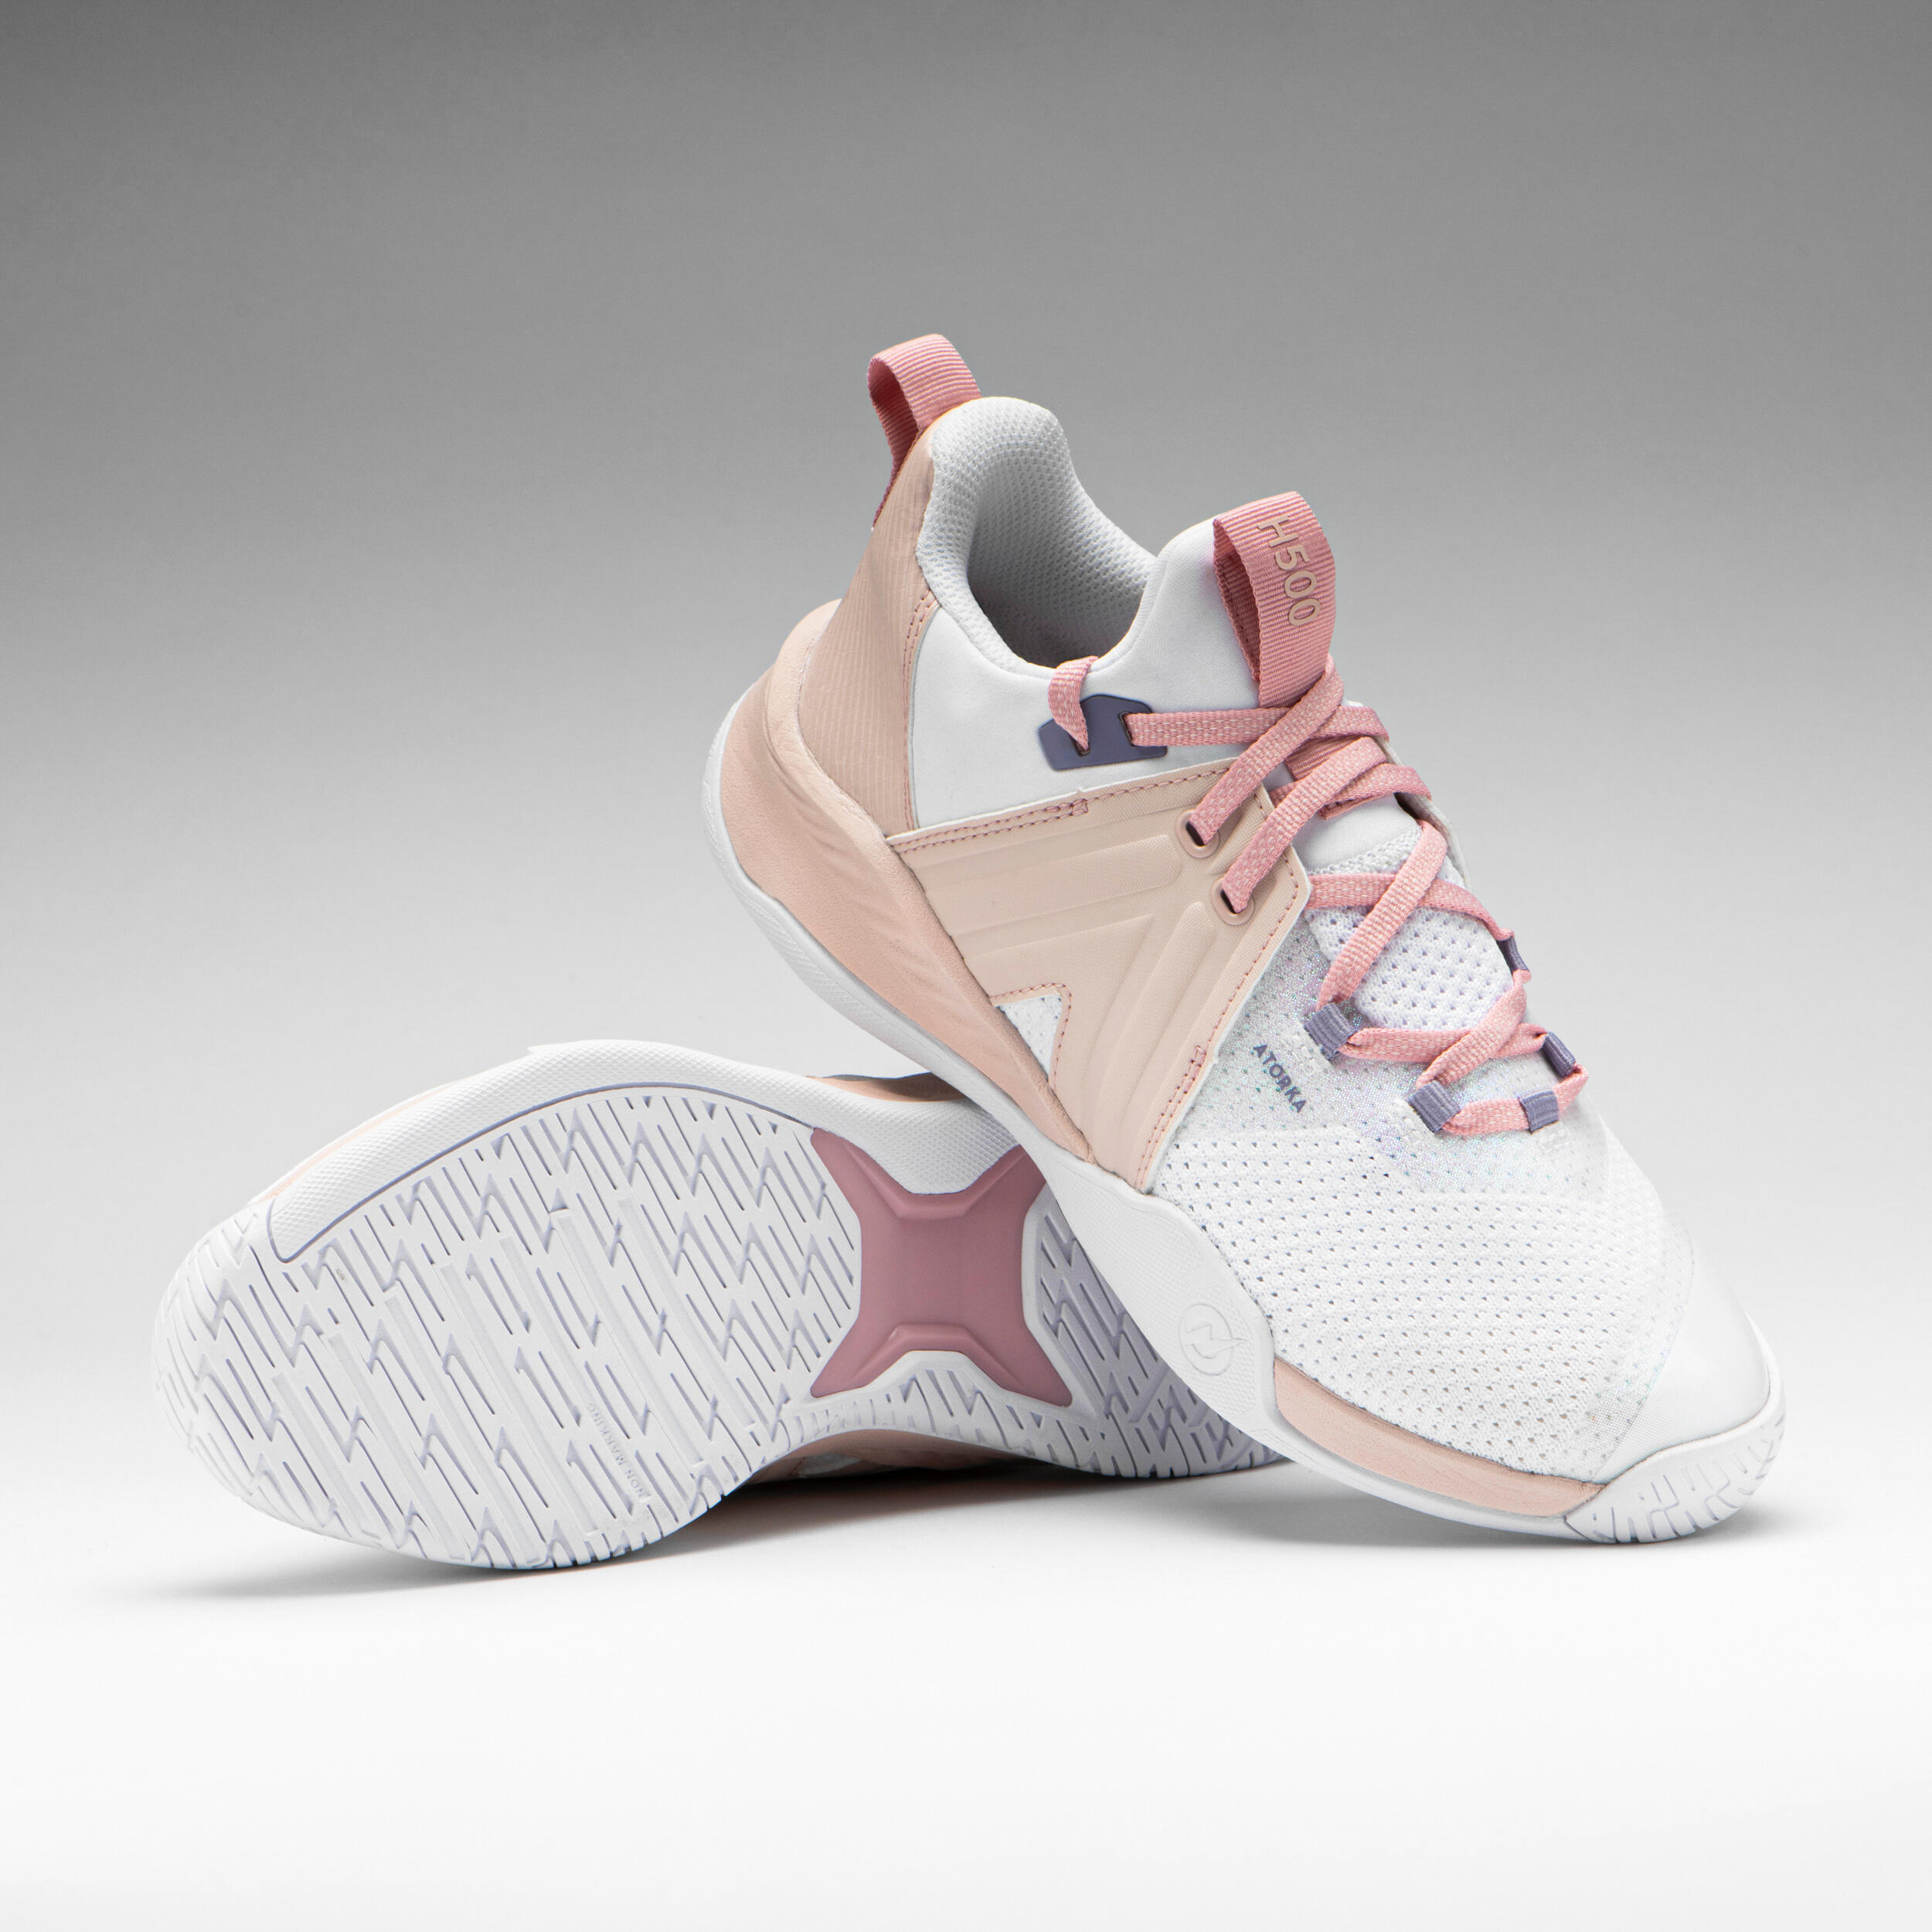 Men's/Women's Handball Shoes H500 Faster - Pink/White 2/17